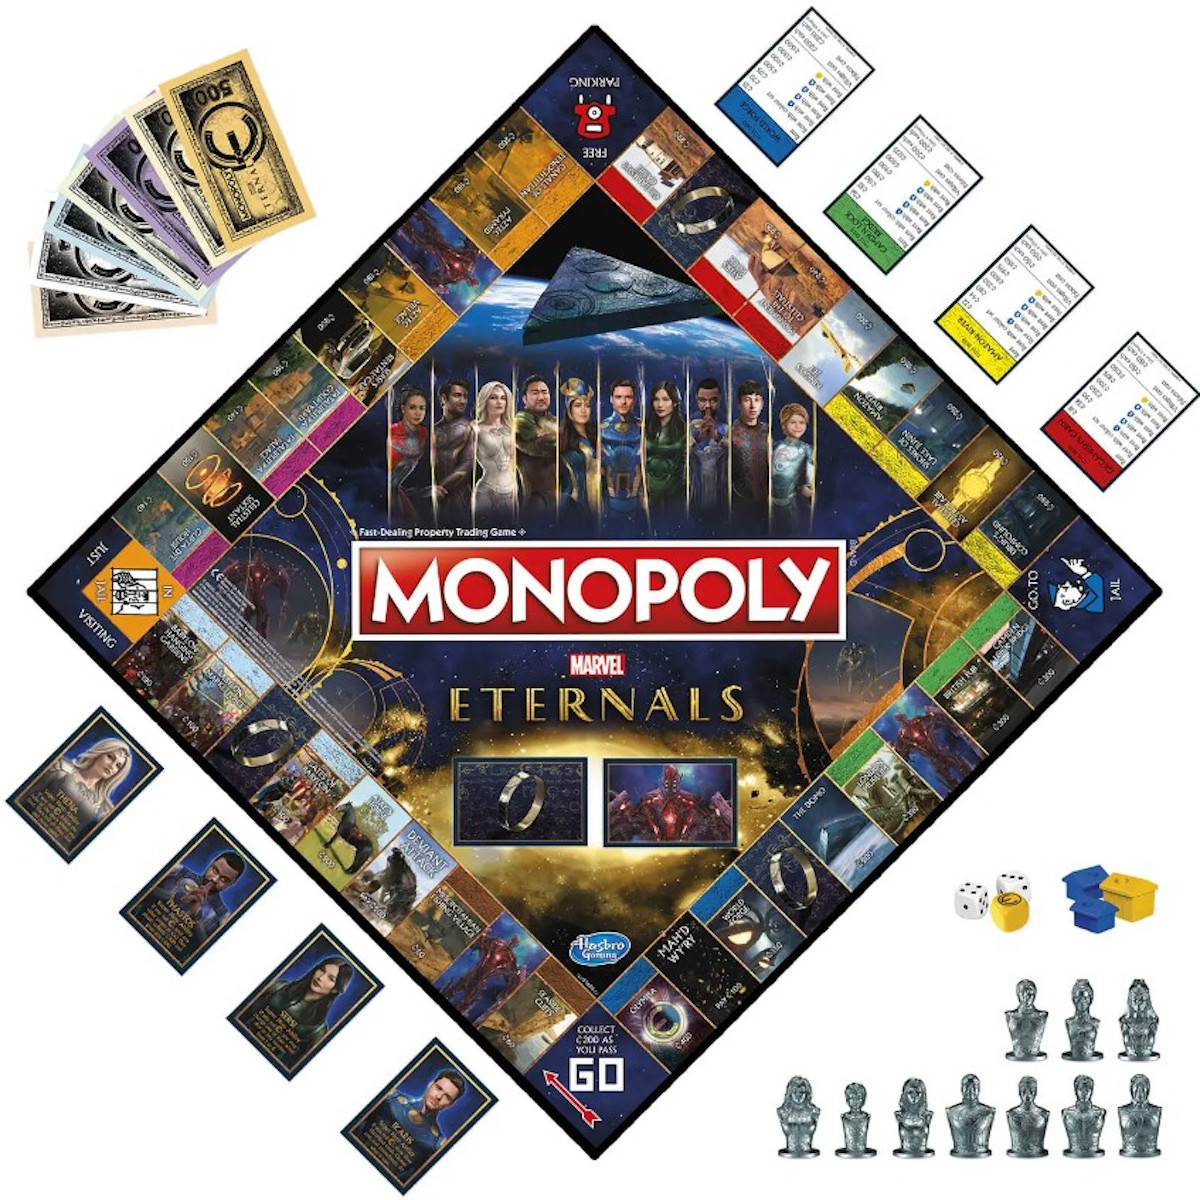 (englisch) Brettspiel Monopoly Eternals HASBRO - Marvel